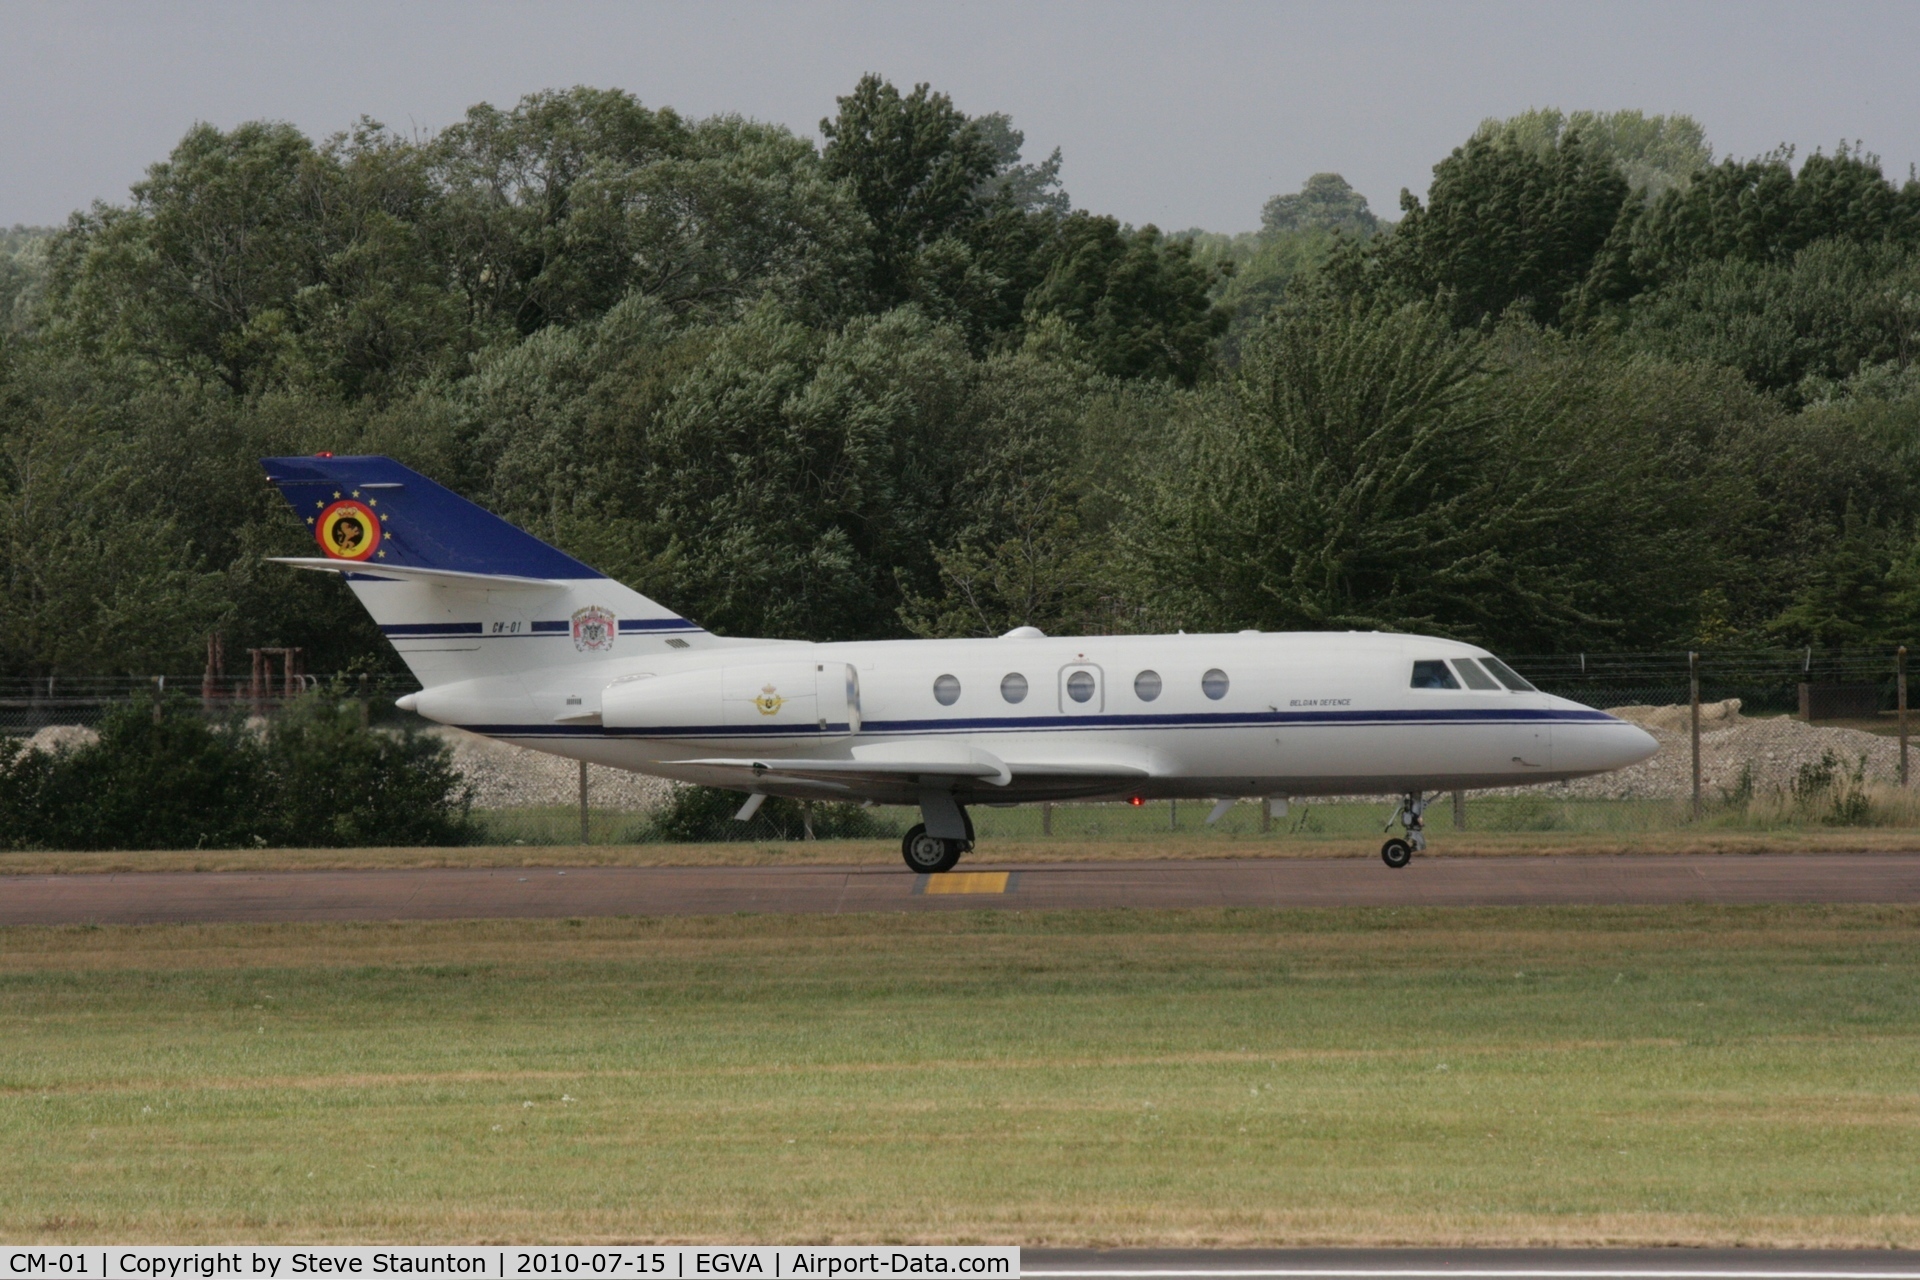 CM-01, 1973 Dassault Falcon (Mystere) 20E C/N 276, Taken at the Royal International Air Tattoo 2010